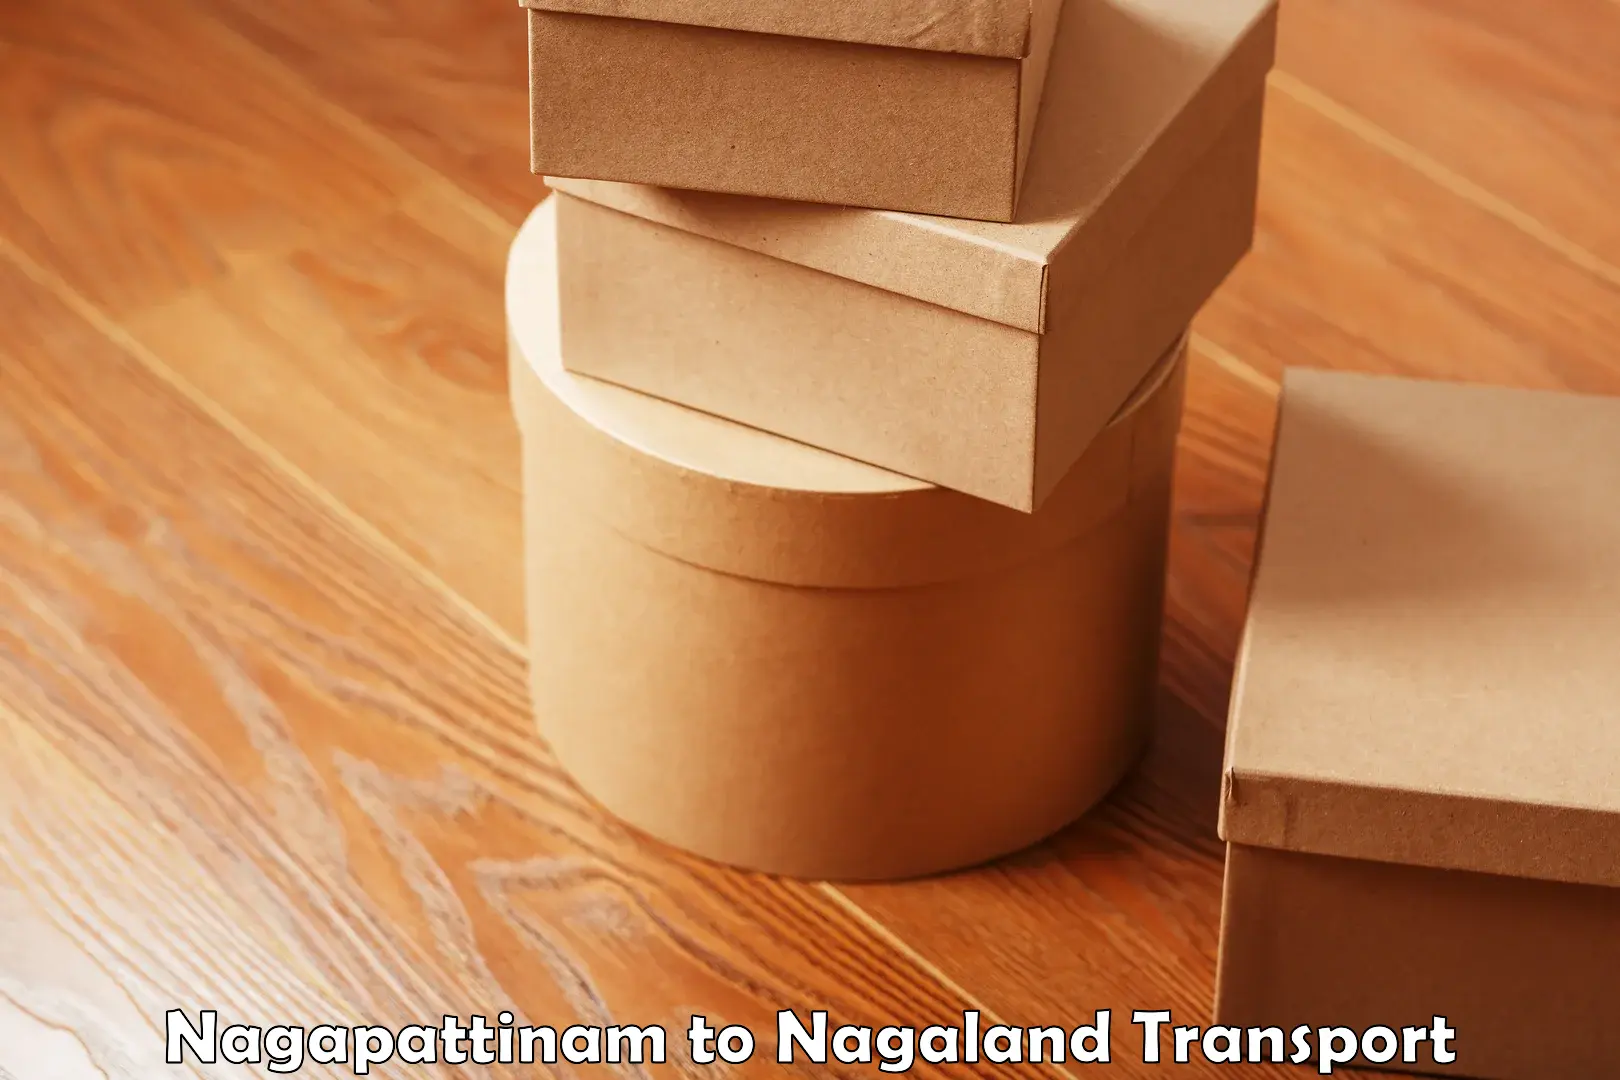 Transport shared services Nagapattinam to Mokokchung